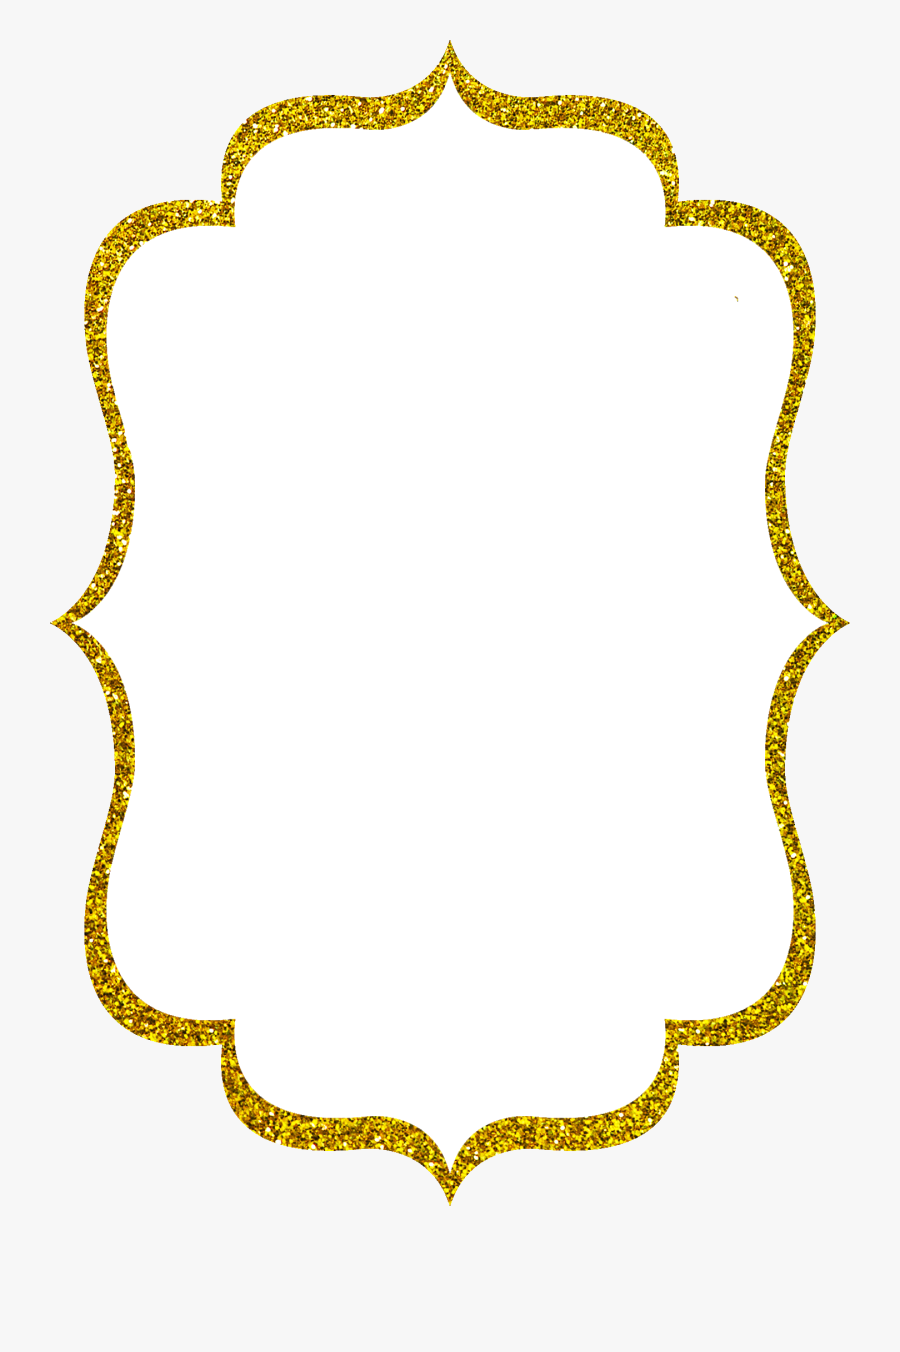 Gold Glitter Frame Png, Transparent Clipart